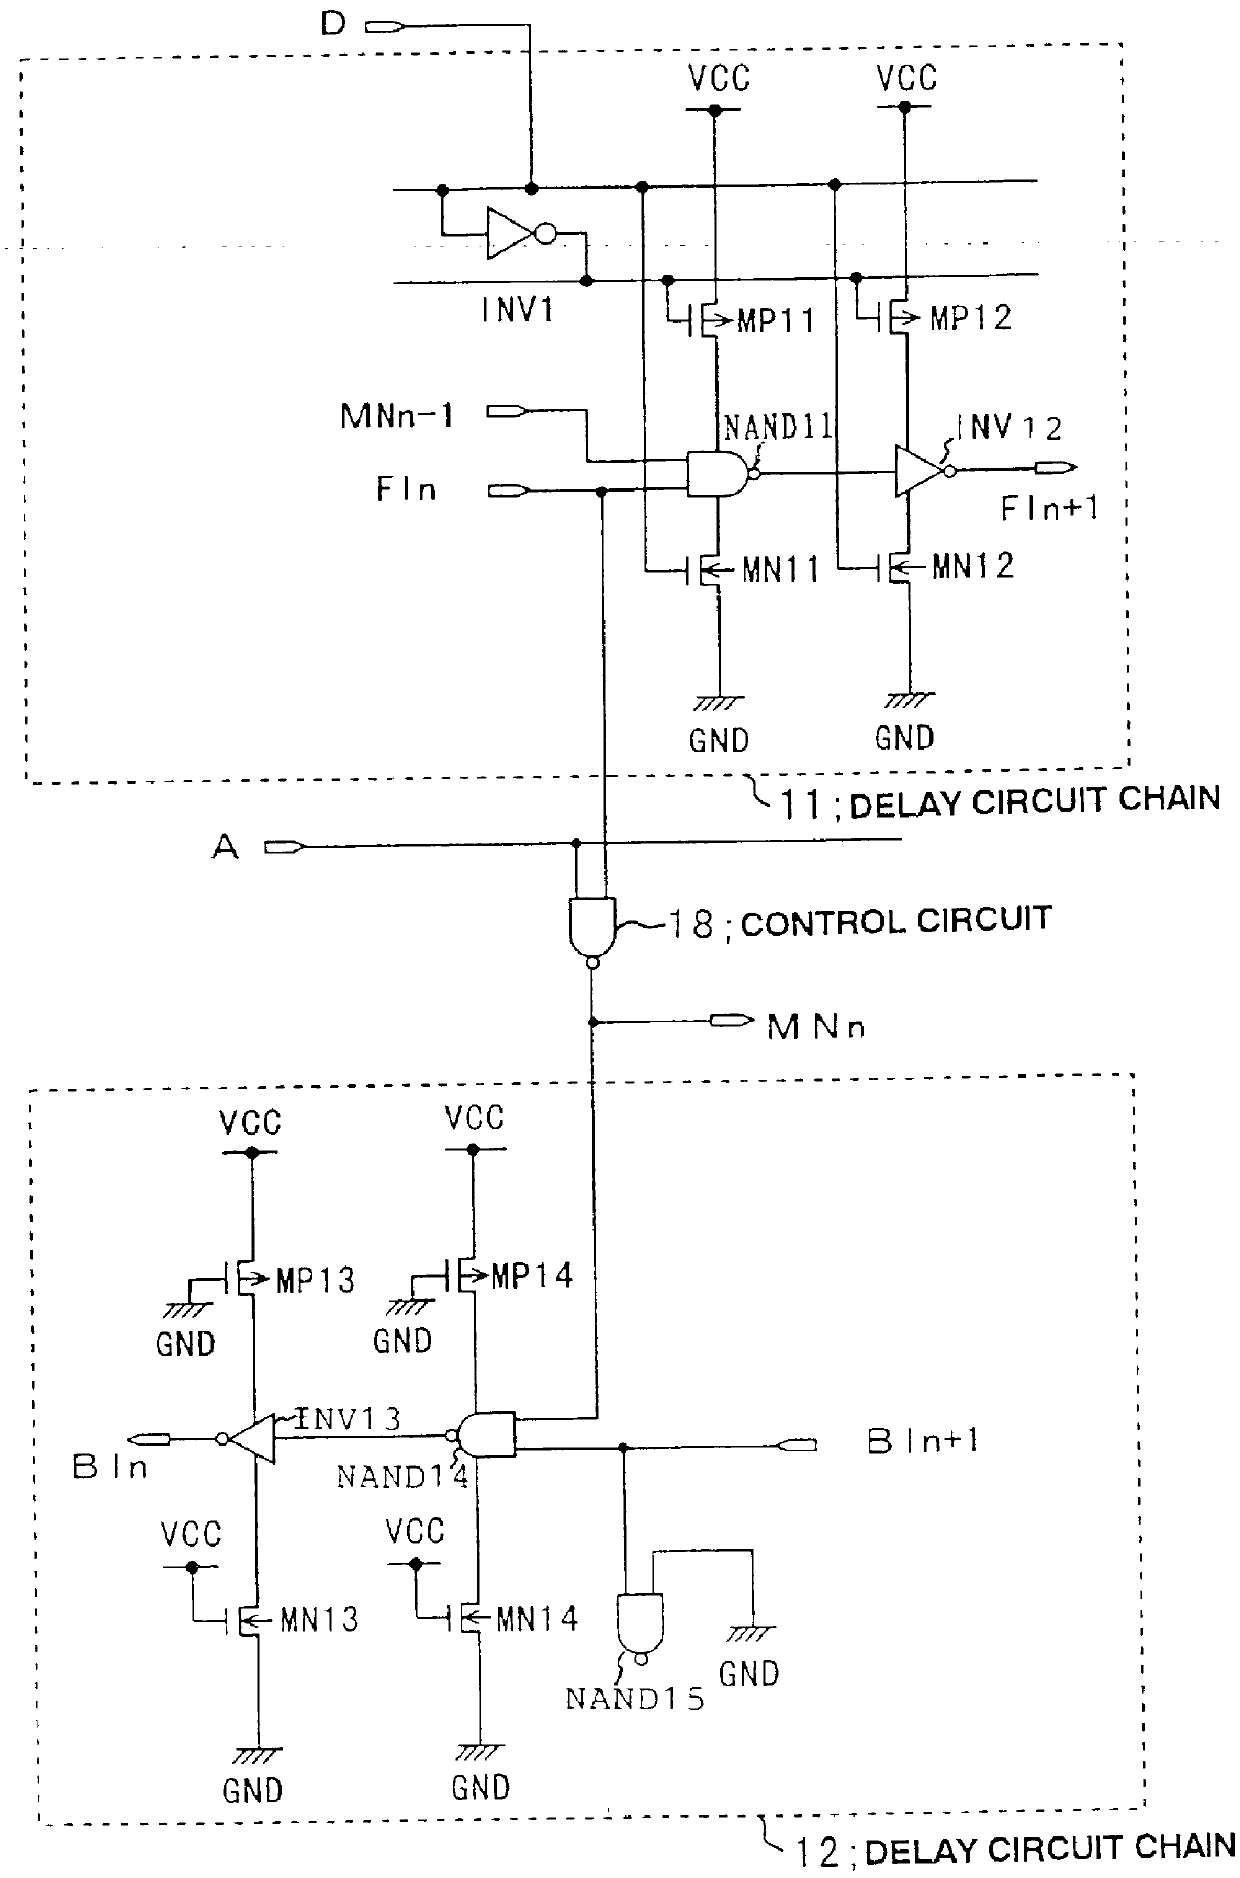 Synchronous delay circuit